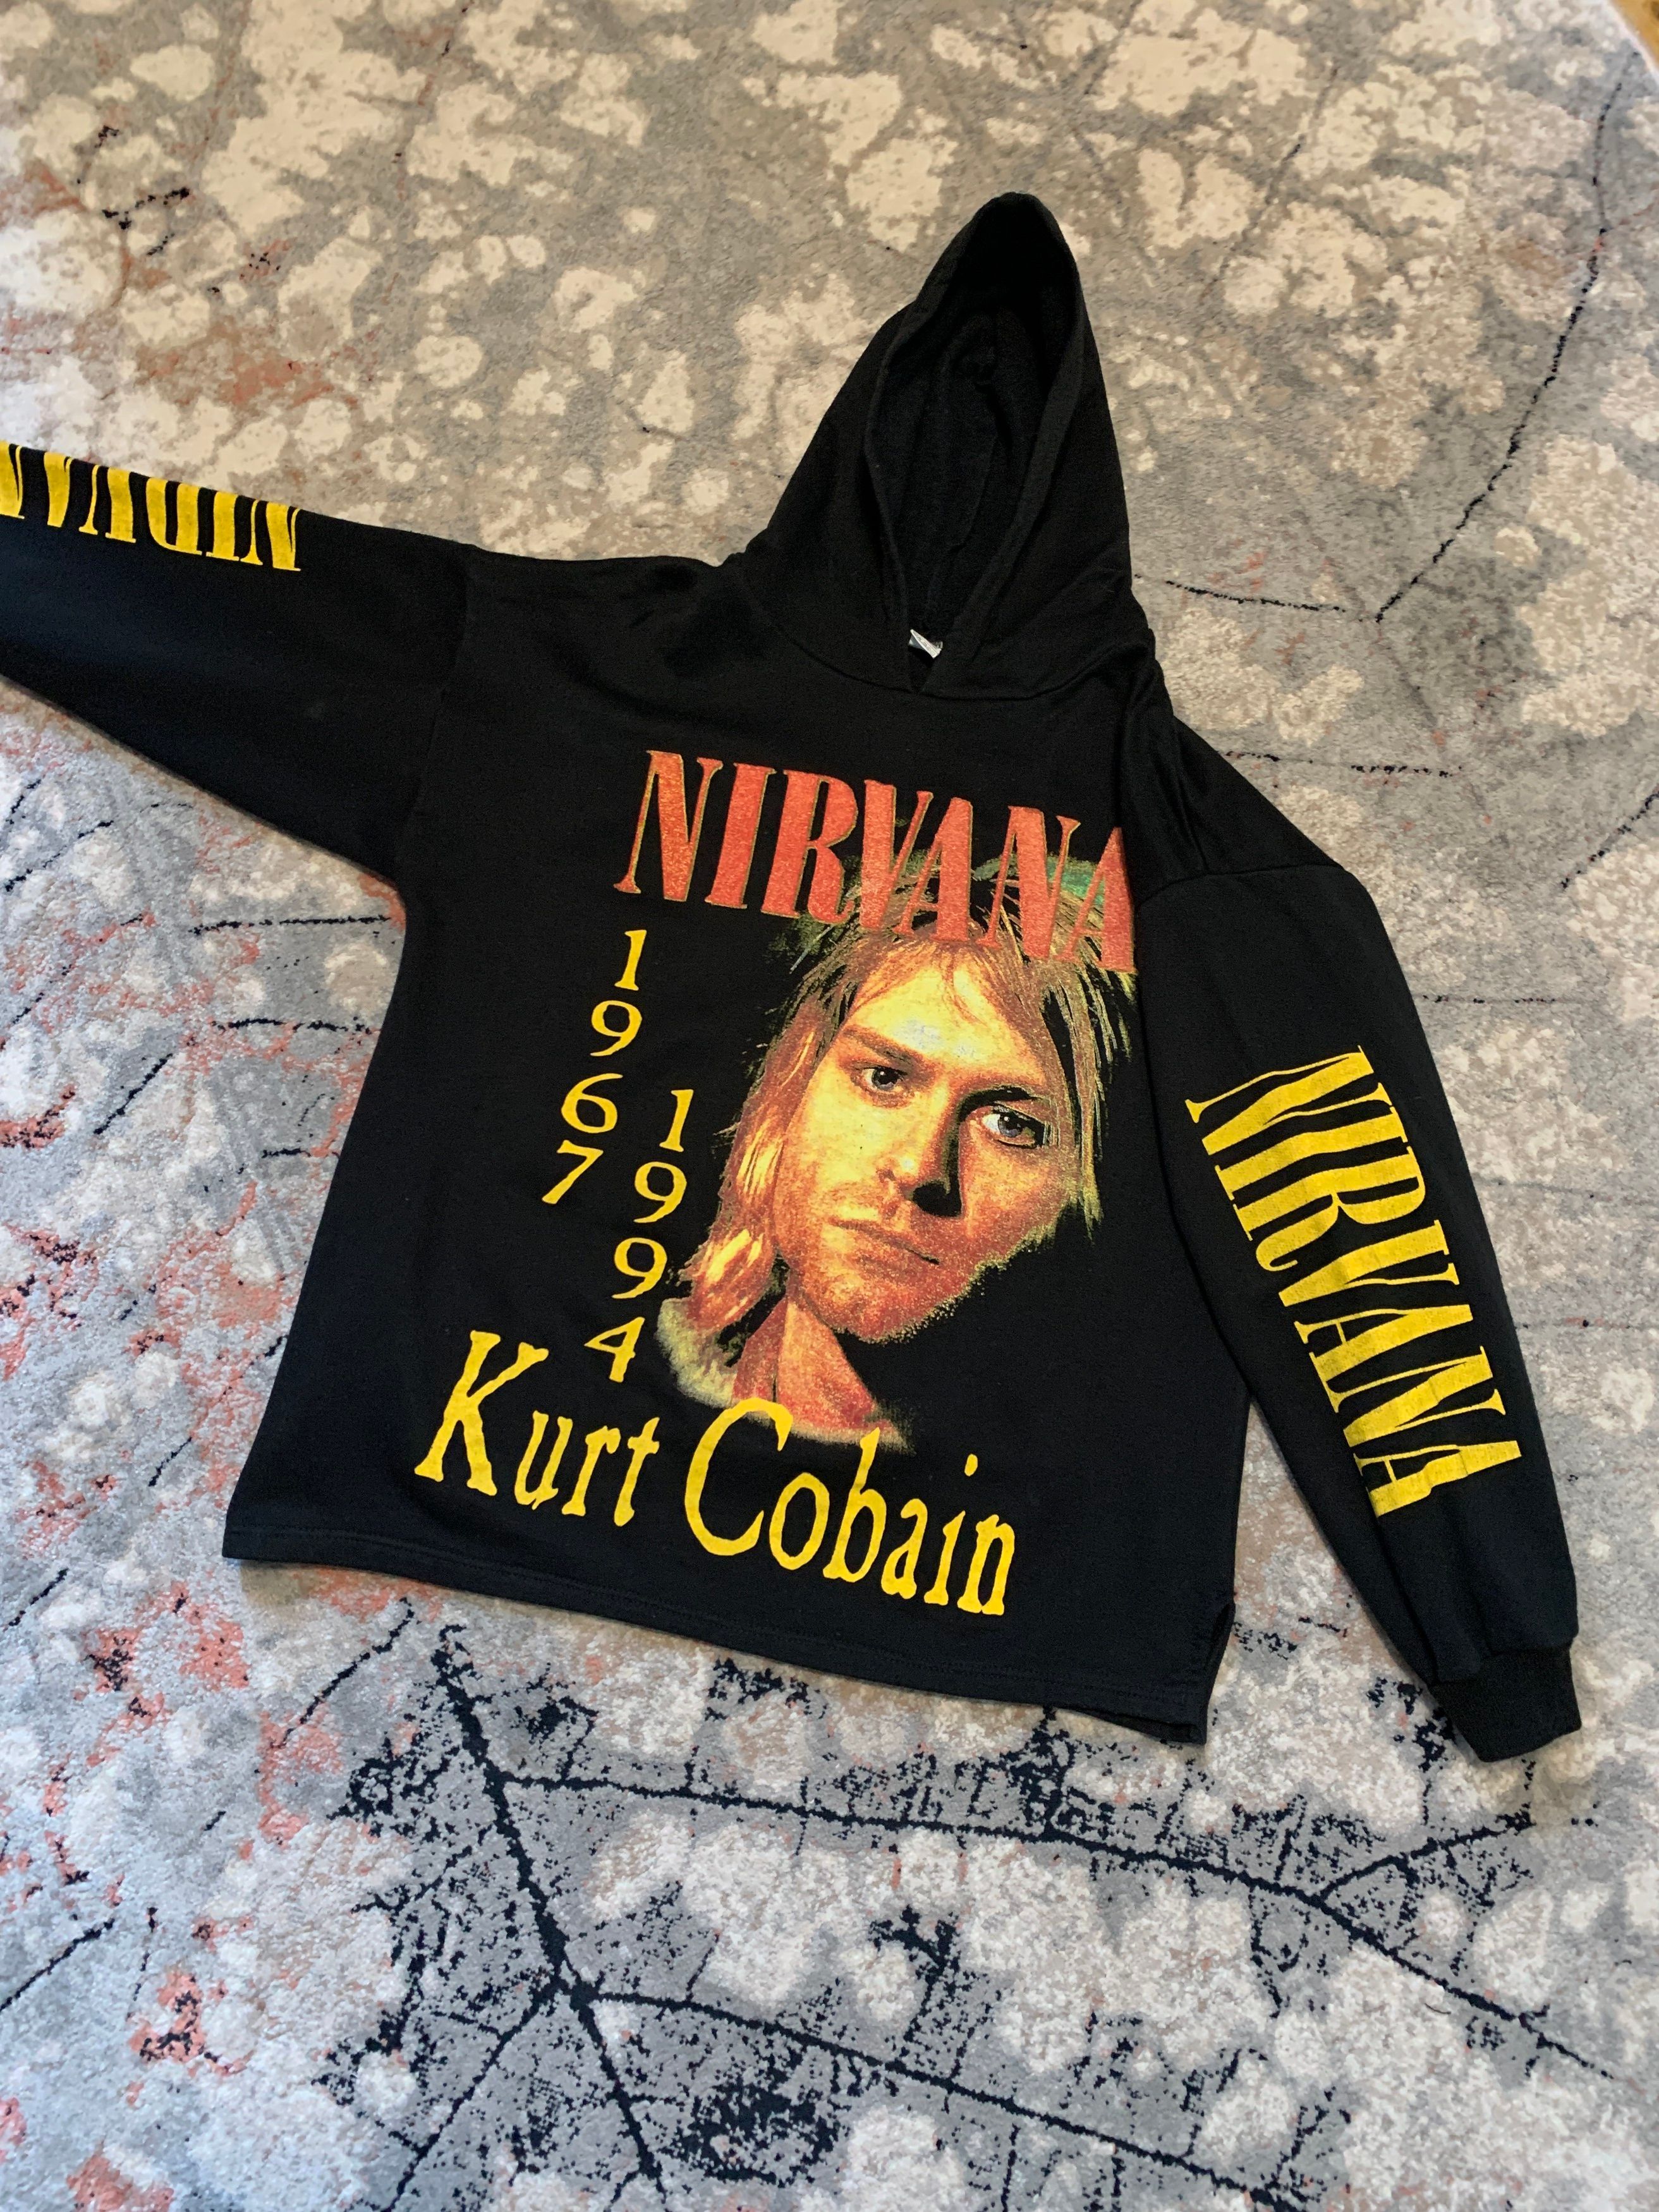 Vintage Nirvana Kurt Cobain 1967-1994 Vintage Bootleg Hoodie Size US S / EU 44-46 / 1 - 1 Preview